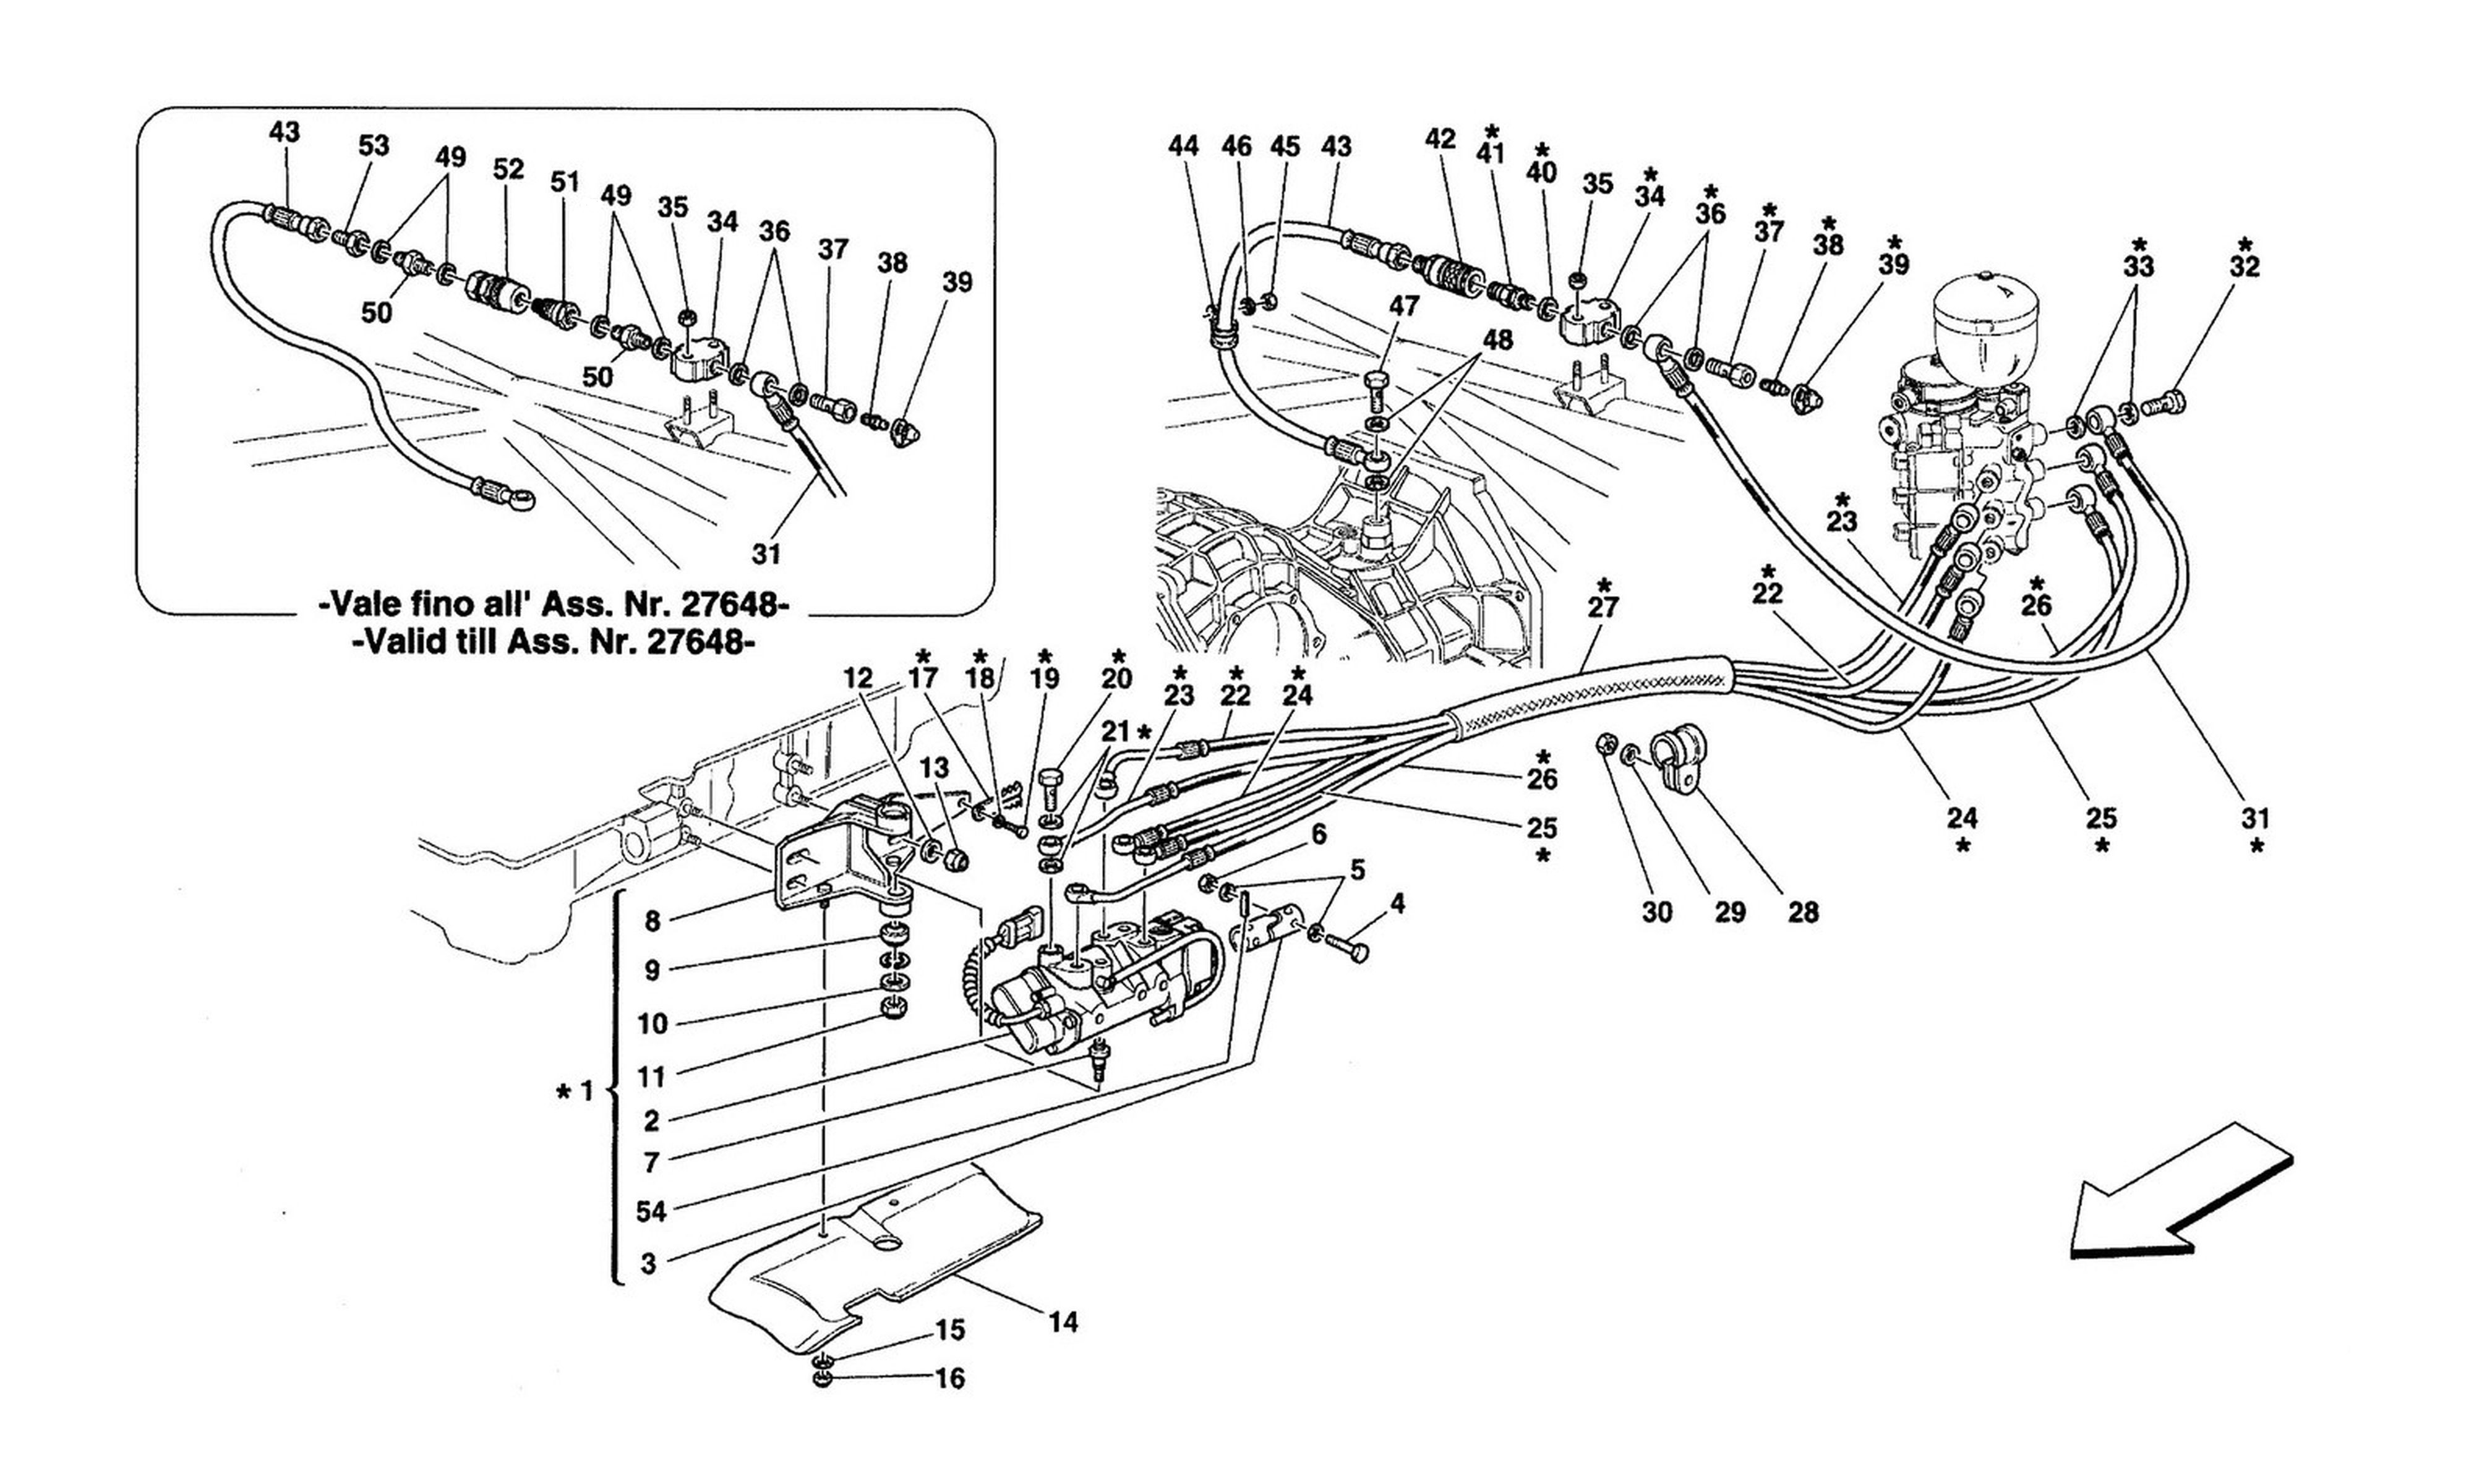 Schematic: F1 Clutch Hydraulic Control -Valid For 355 F1 Cars-